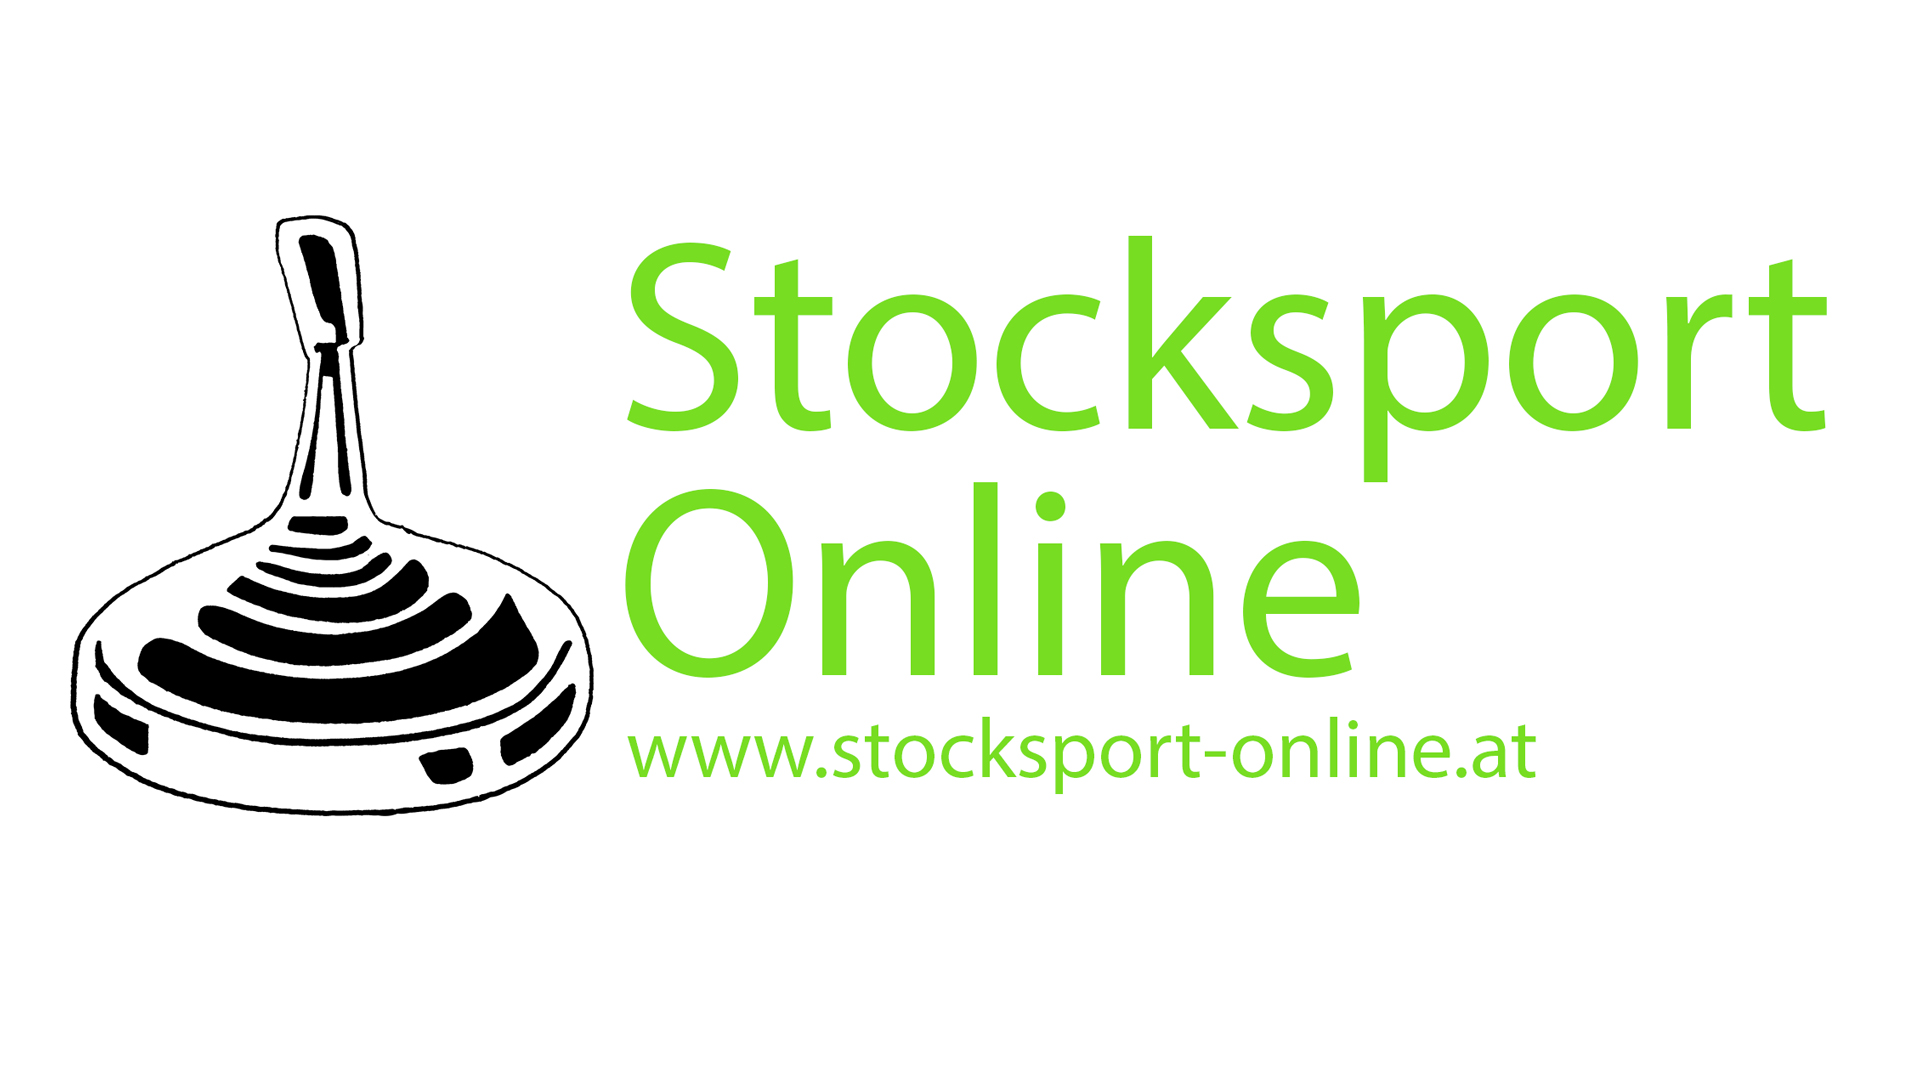 (c) Stocksport-online.at